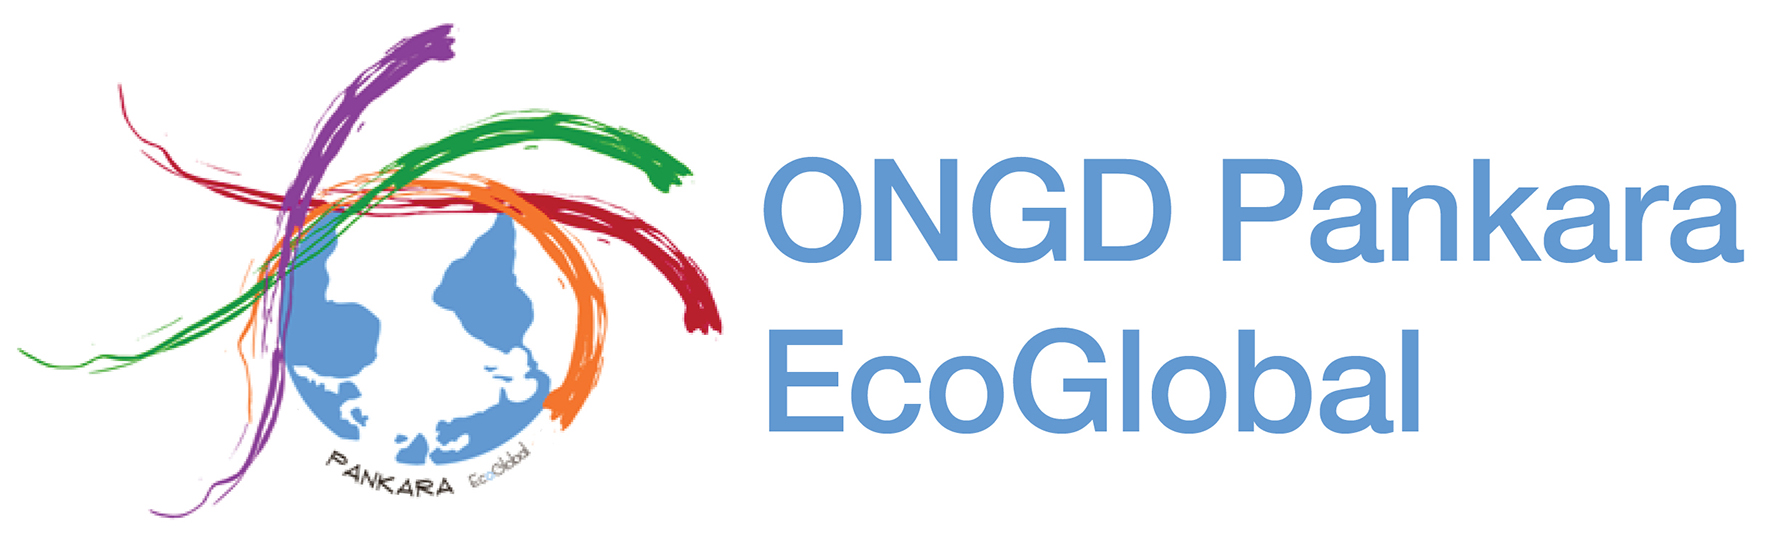 ONGD Pankara EcolGlobal